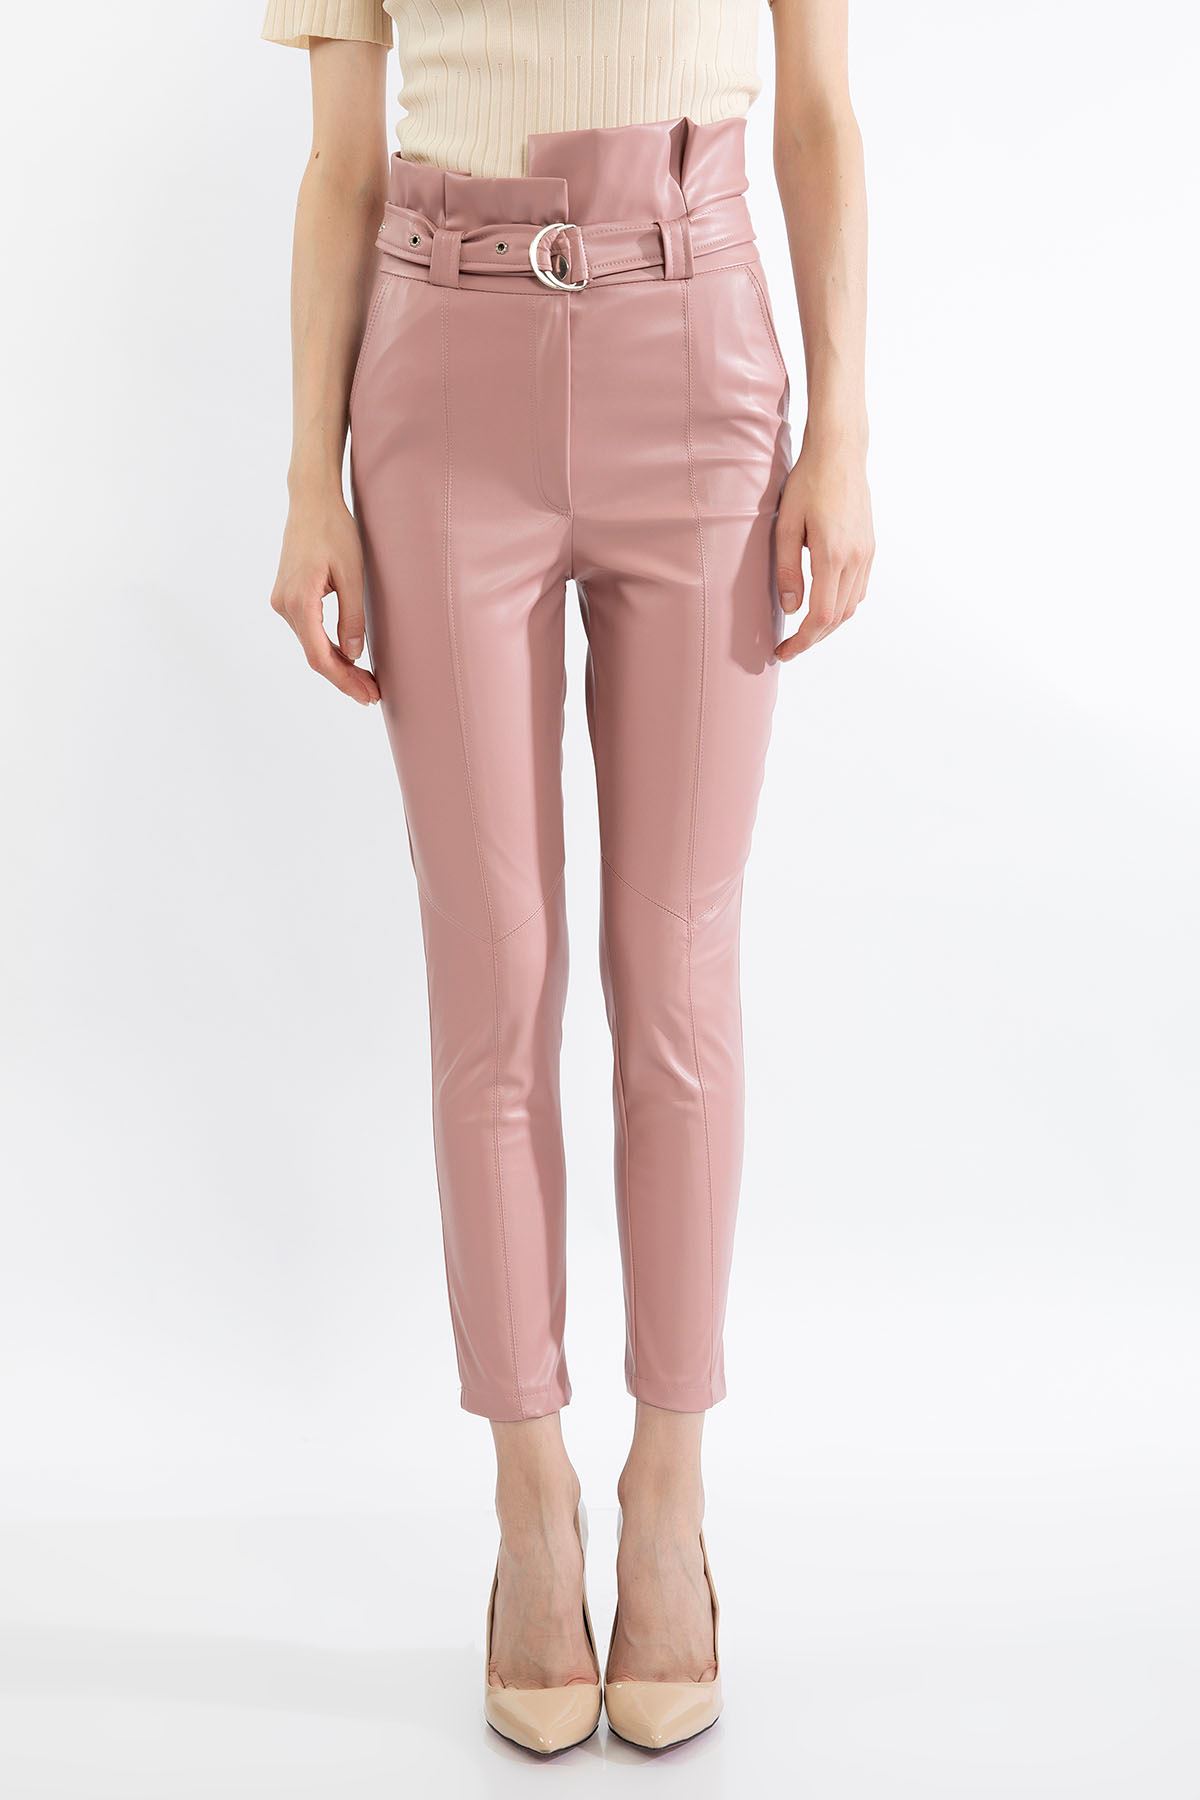 Zara Leather Fabric Ankle Length Tight Fit High Waist Belt Women'S Trouser - Light Pink